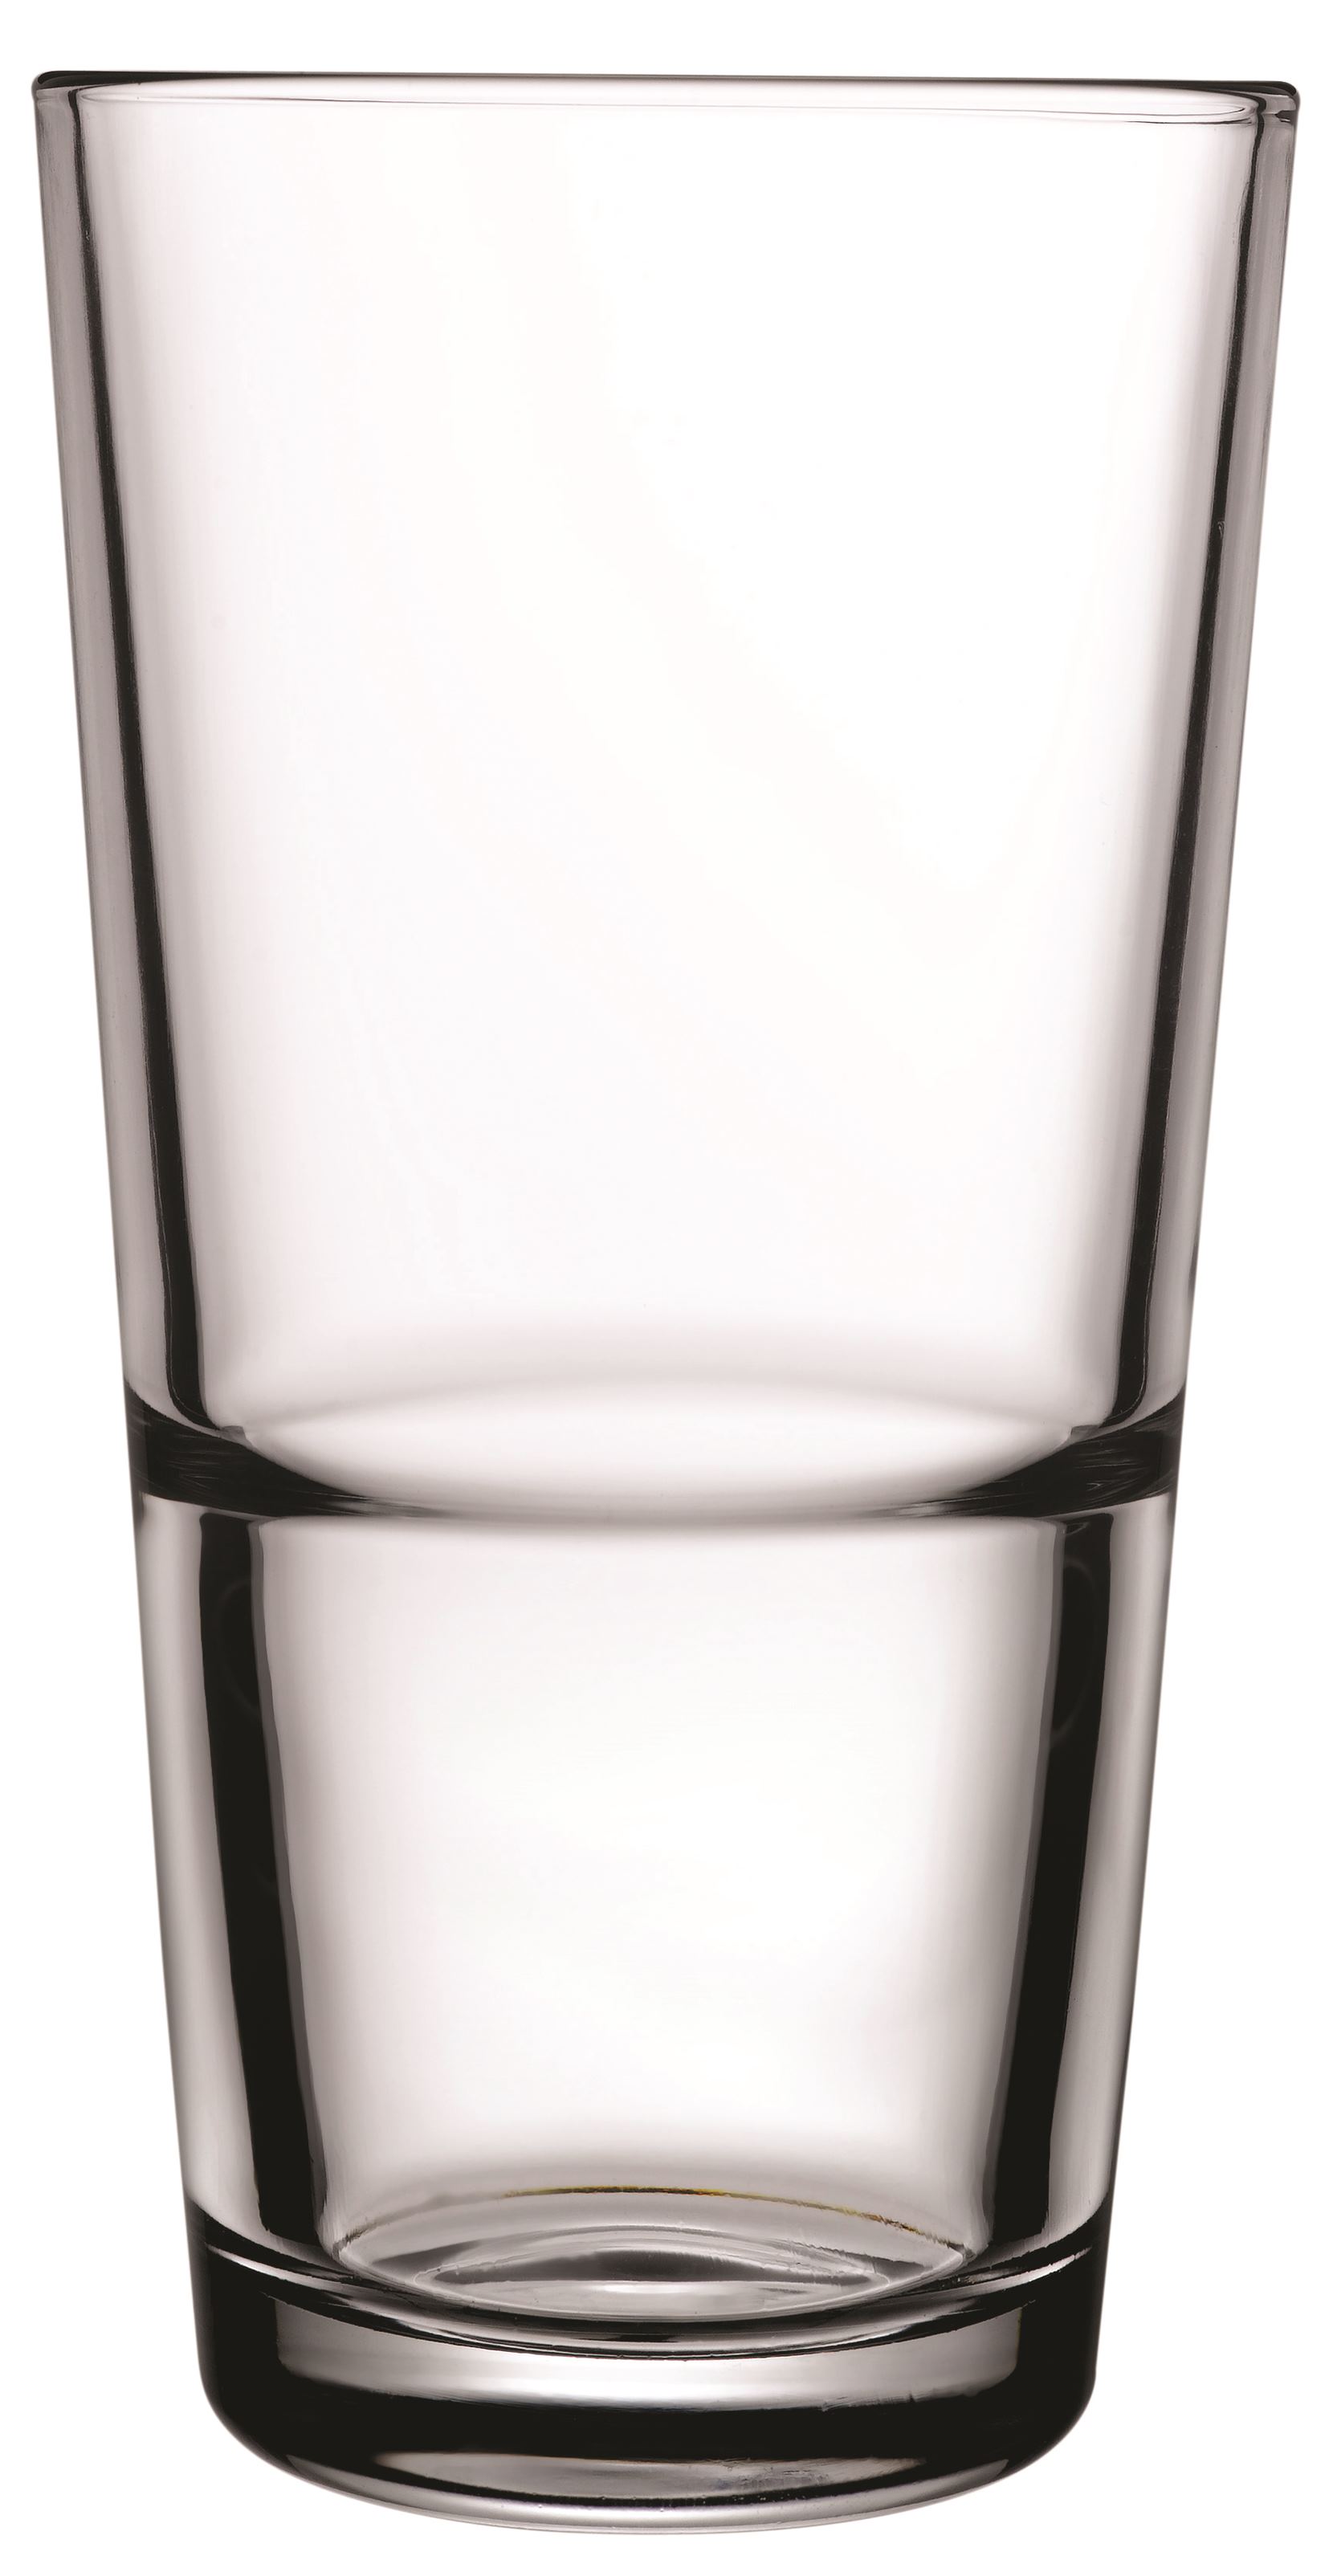 Longdrinkglas Grande S, 0,48 ltr., Glas